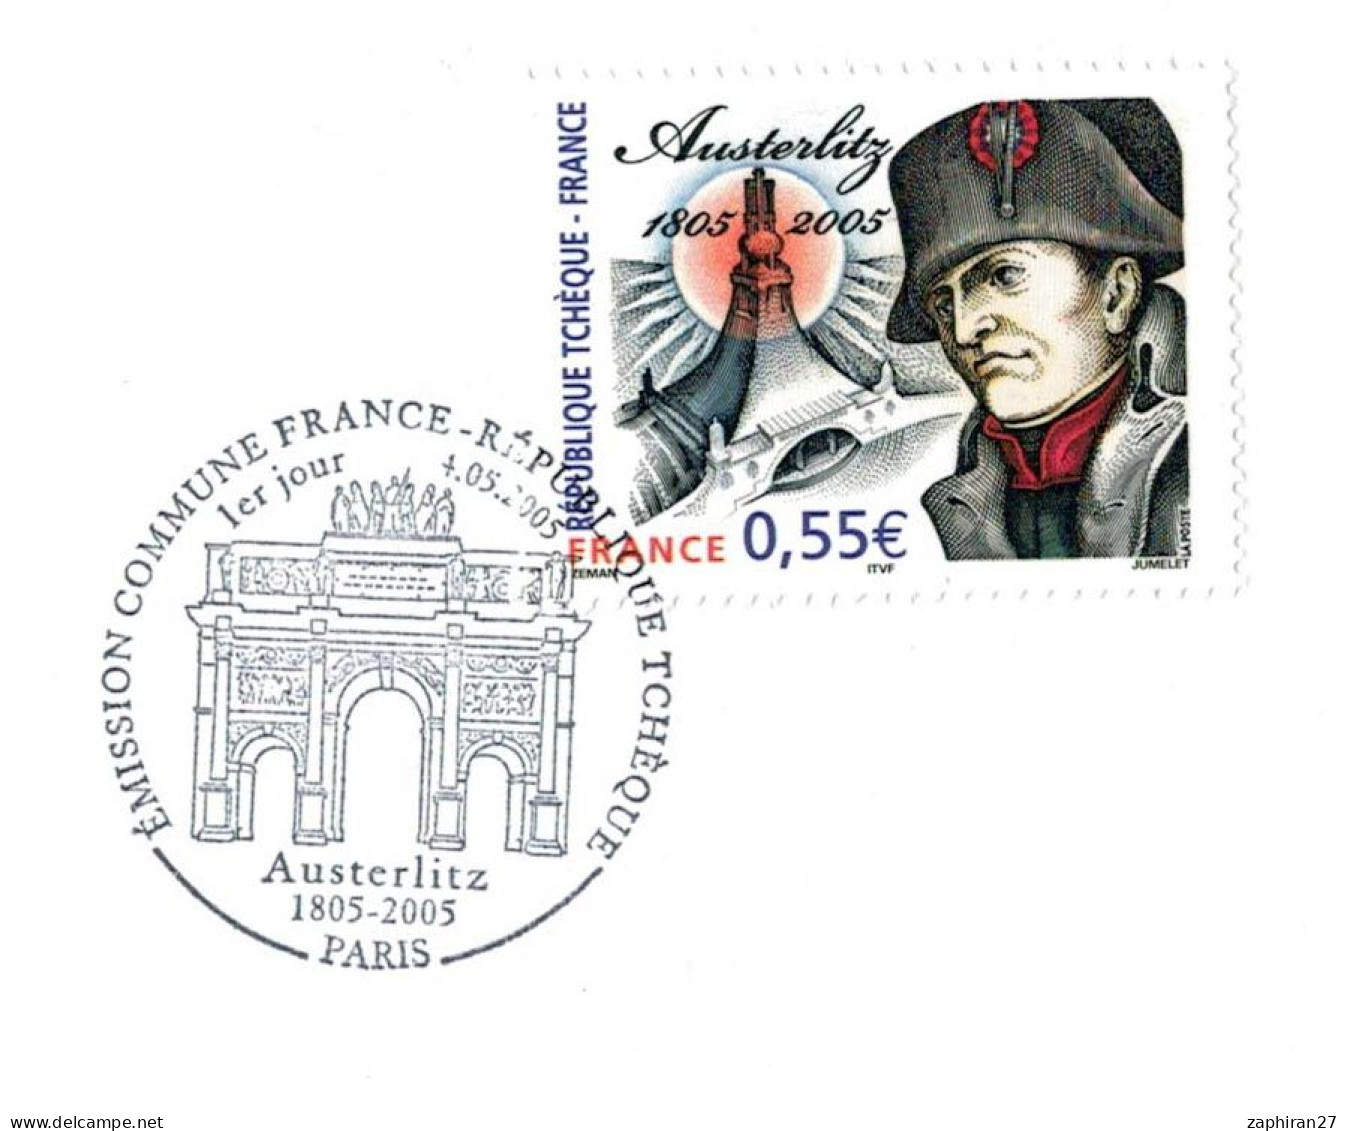 PARIS EMISSION COMMUNE FRACE - REPUBLIQUE TCHEQUE NAPOLEON AUSTERLITZ 1805/2005 (4-5-2005) #414# - Napoleon